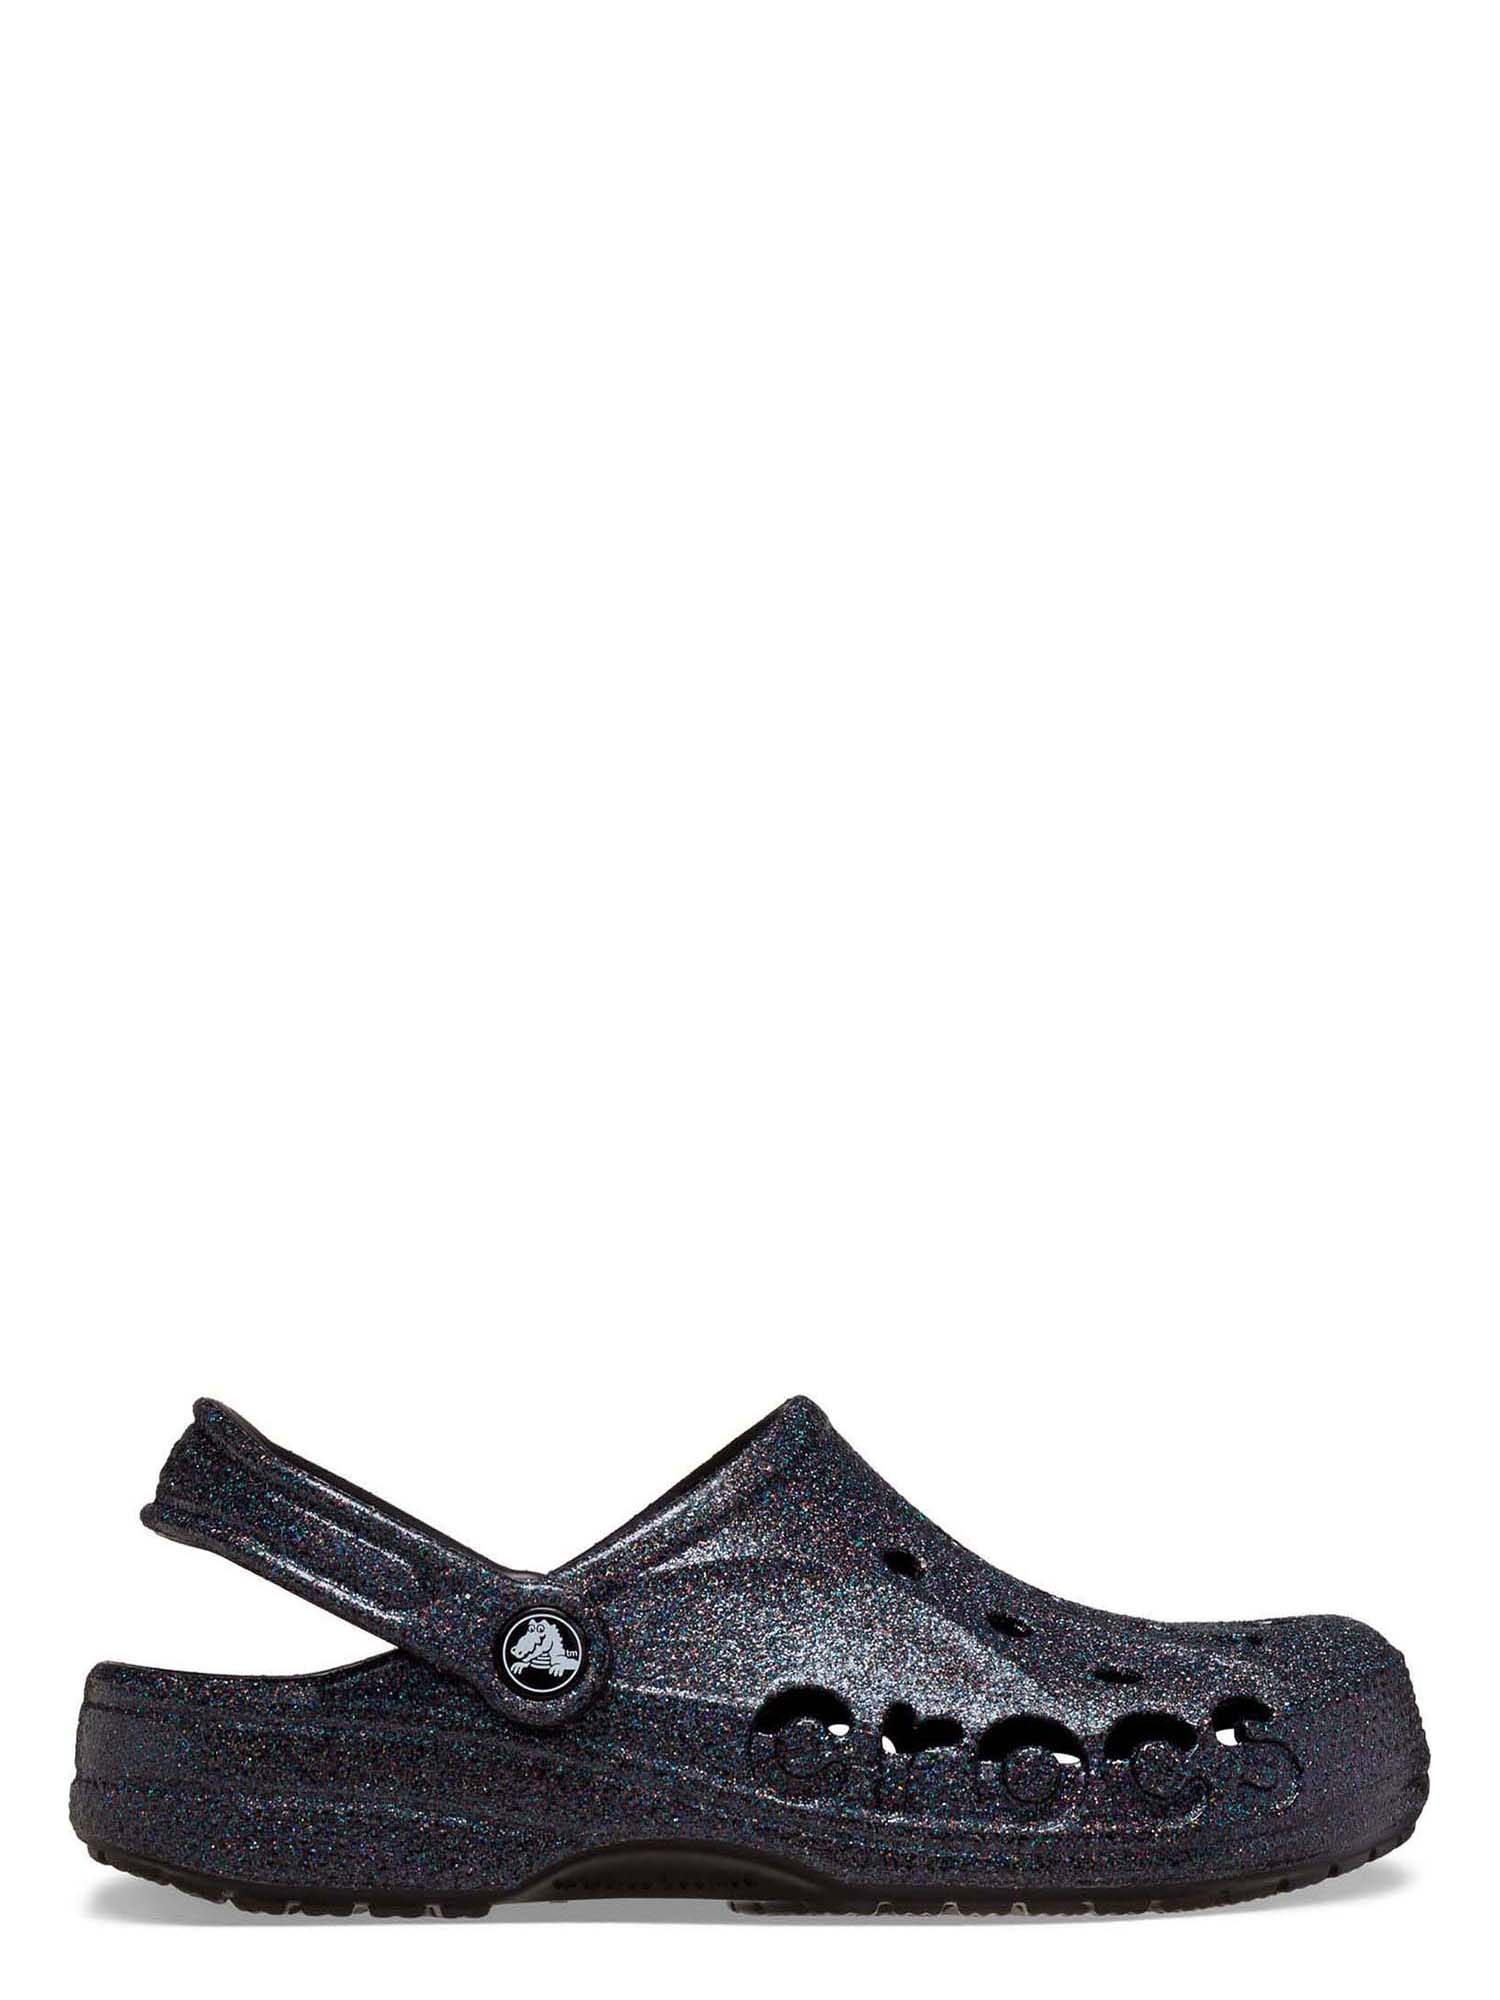 Crocs Unisex Baya Glitter Clog Sandal - image 3 of 7